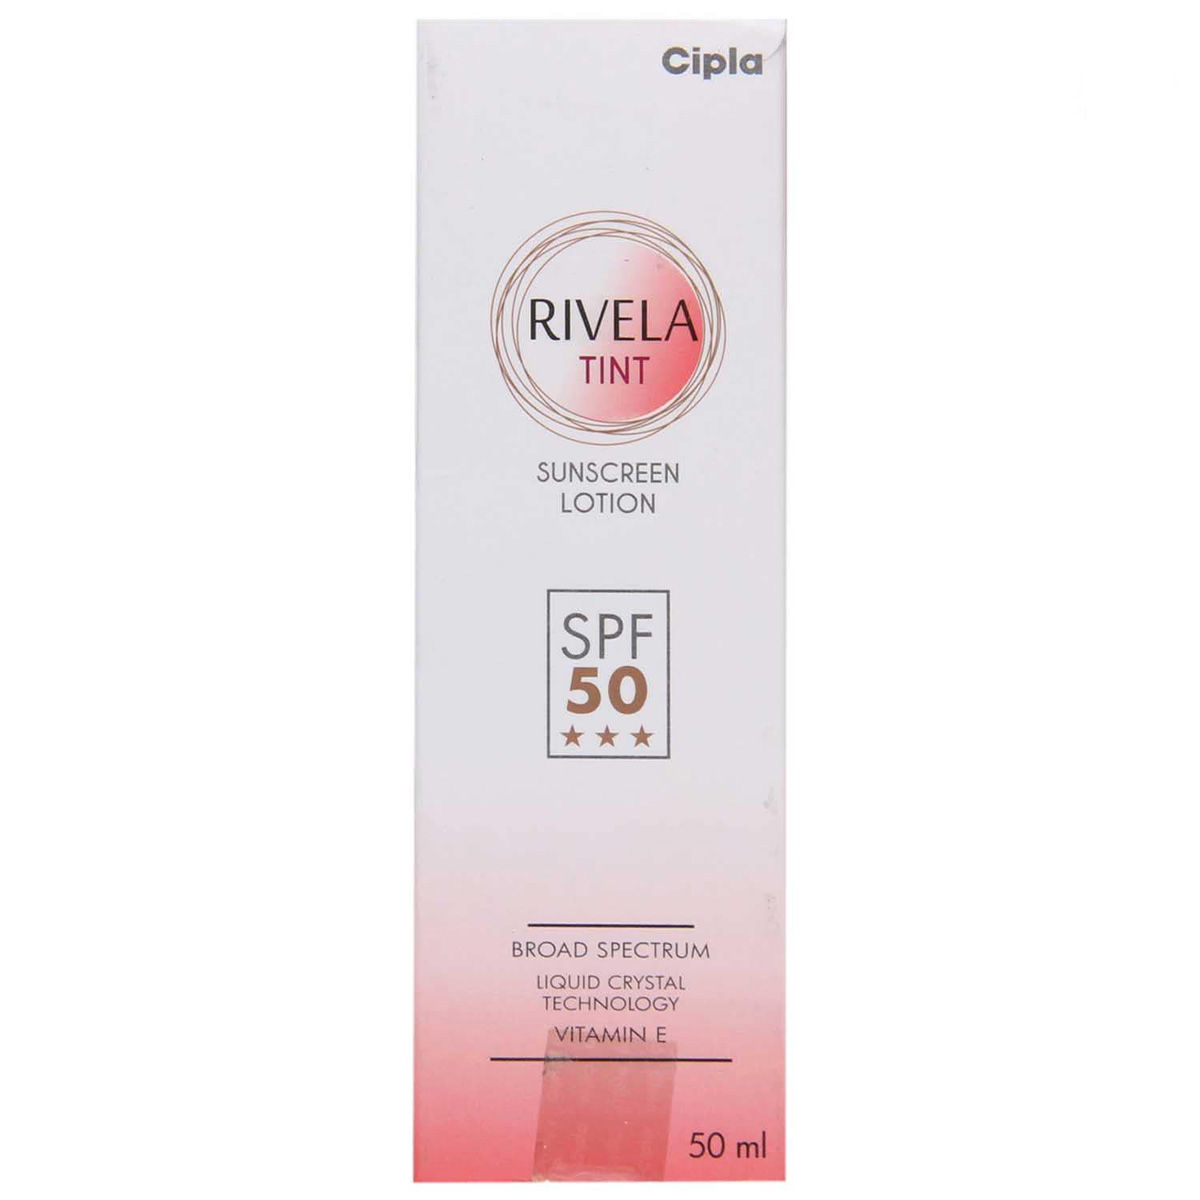 Buy Rivela Tint Sunscreen Lotion 50 ml Online